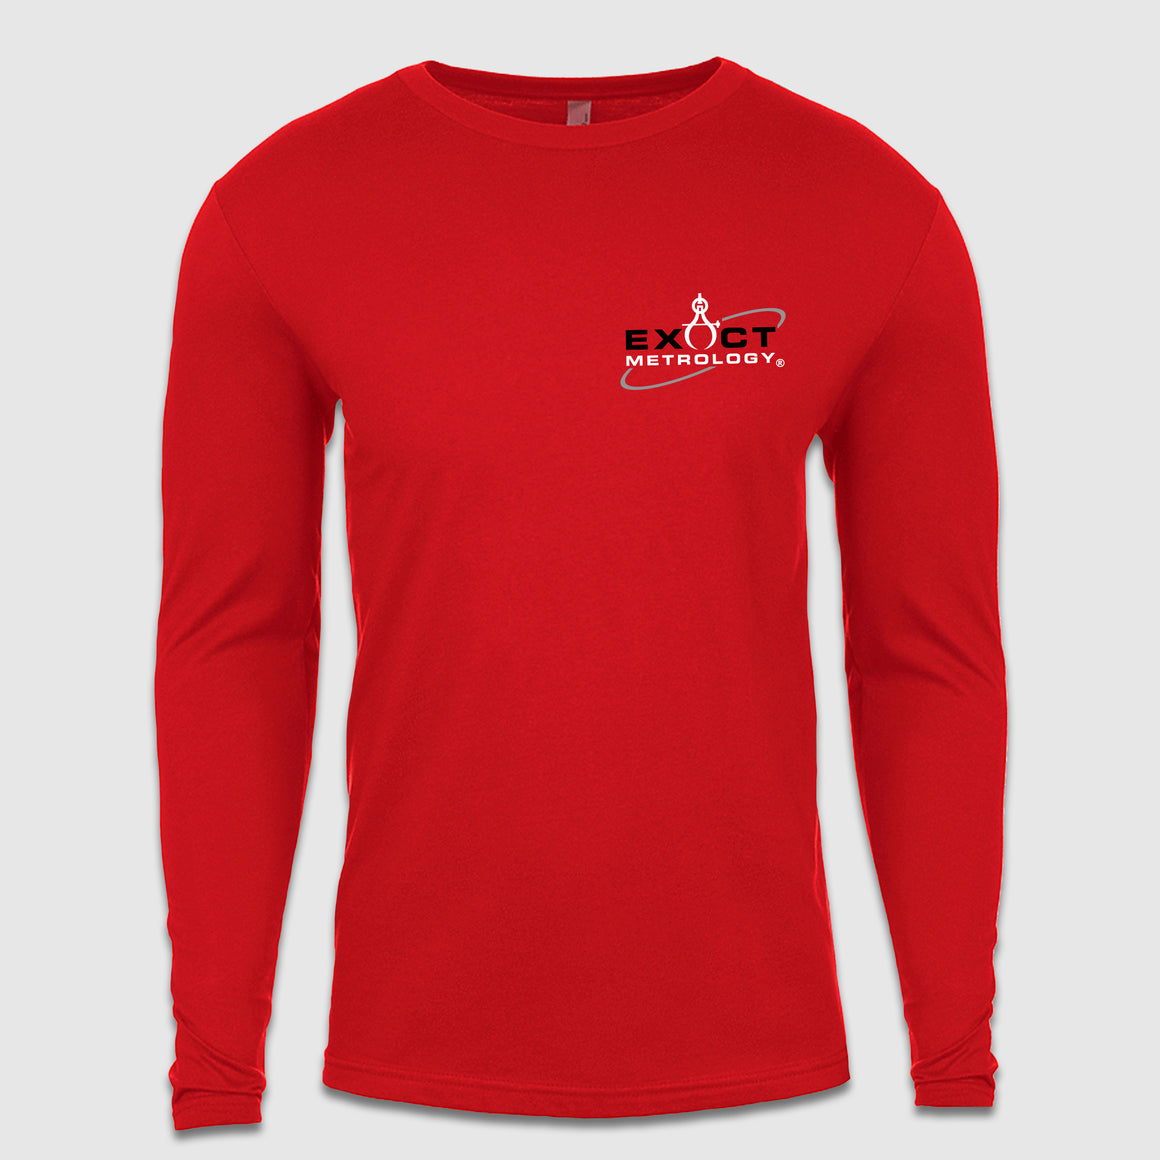 Exact Metrology Small Chest Logo Long Sleeve Tee - Cincy Shirts